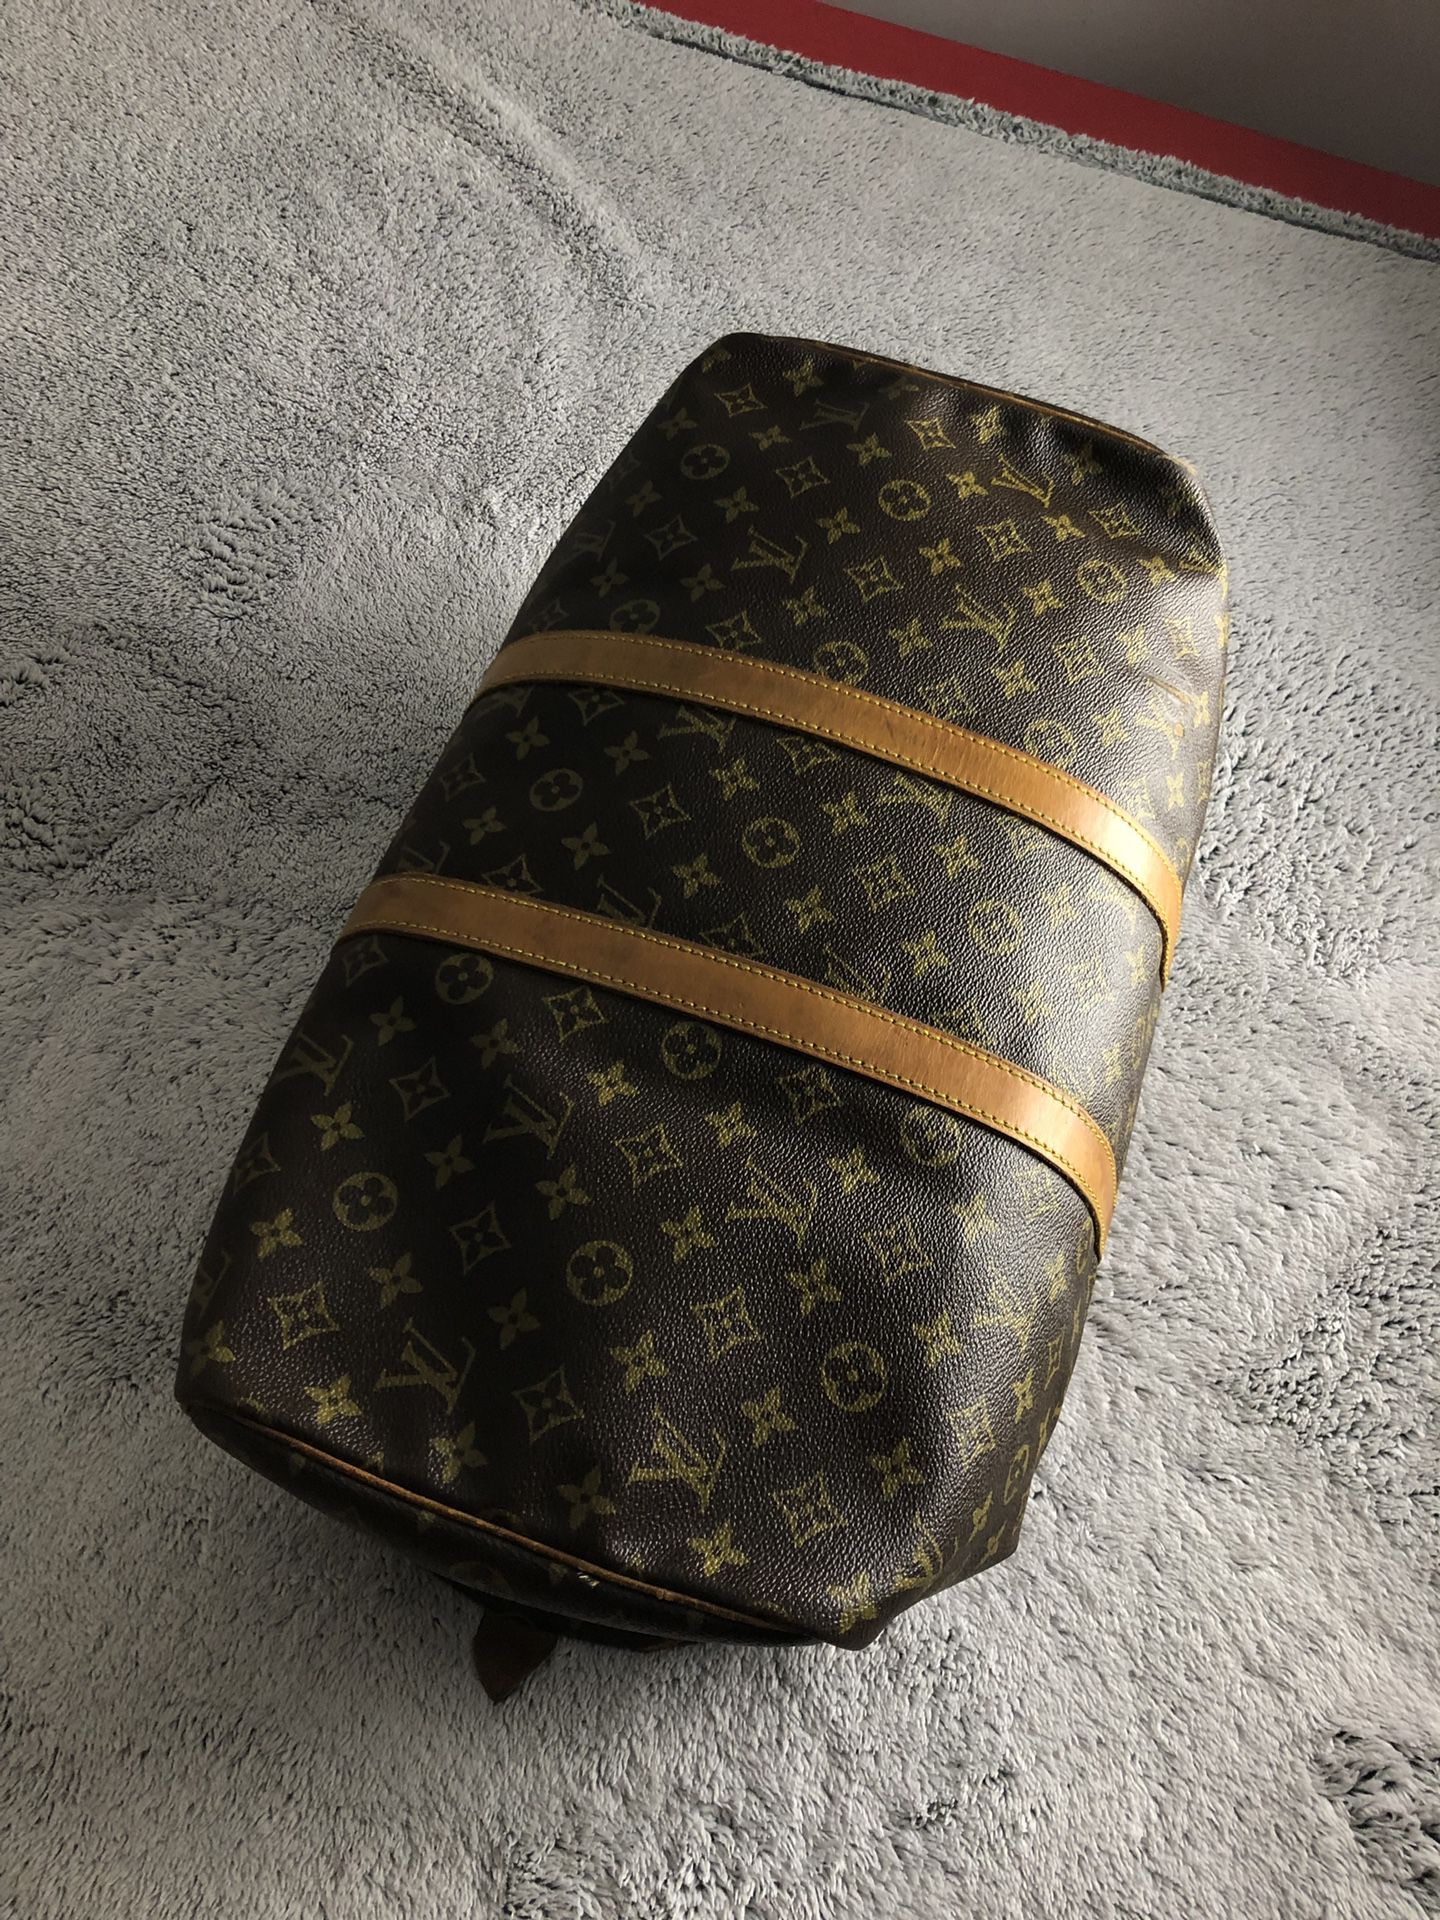 Louis Vuitton Keepall Bandoulière 45 Duffle Bag Black for Sale in Bellevue,  WA - OfferUp